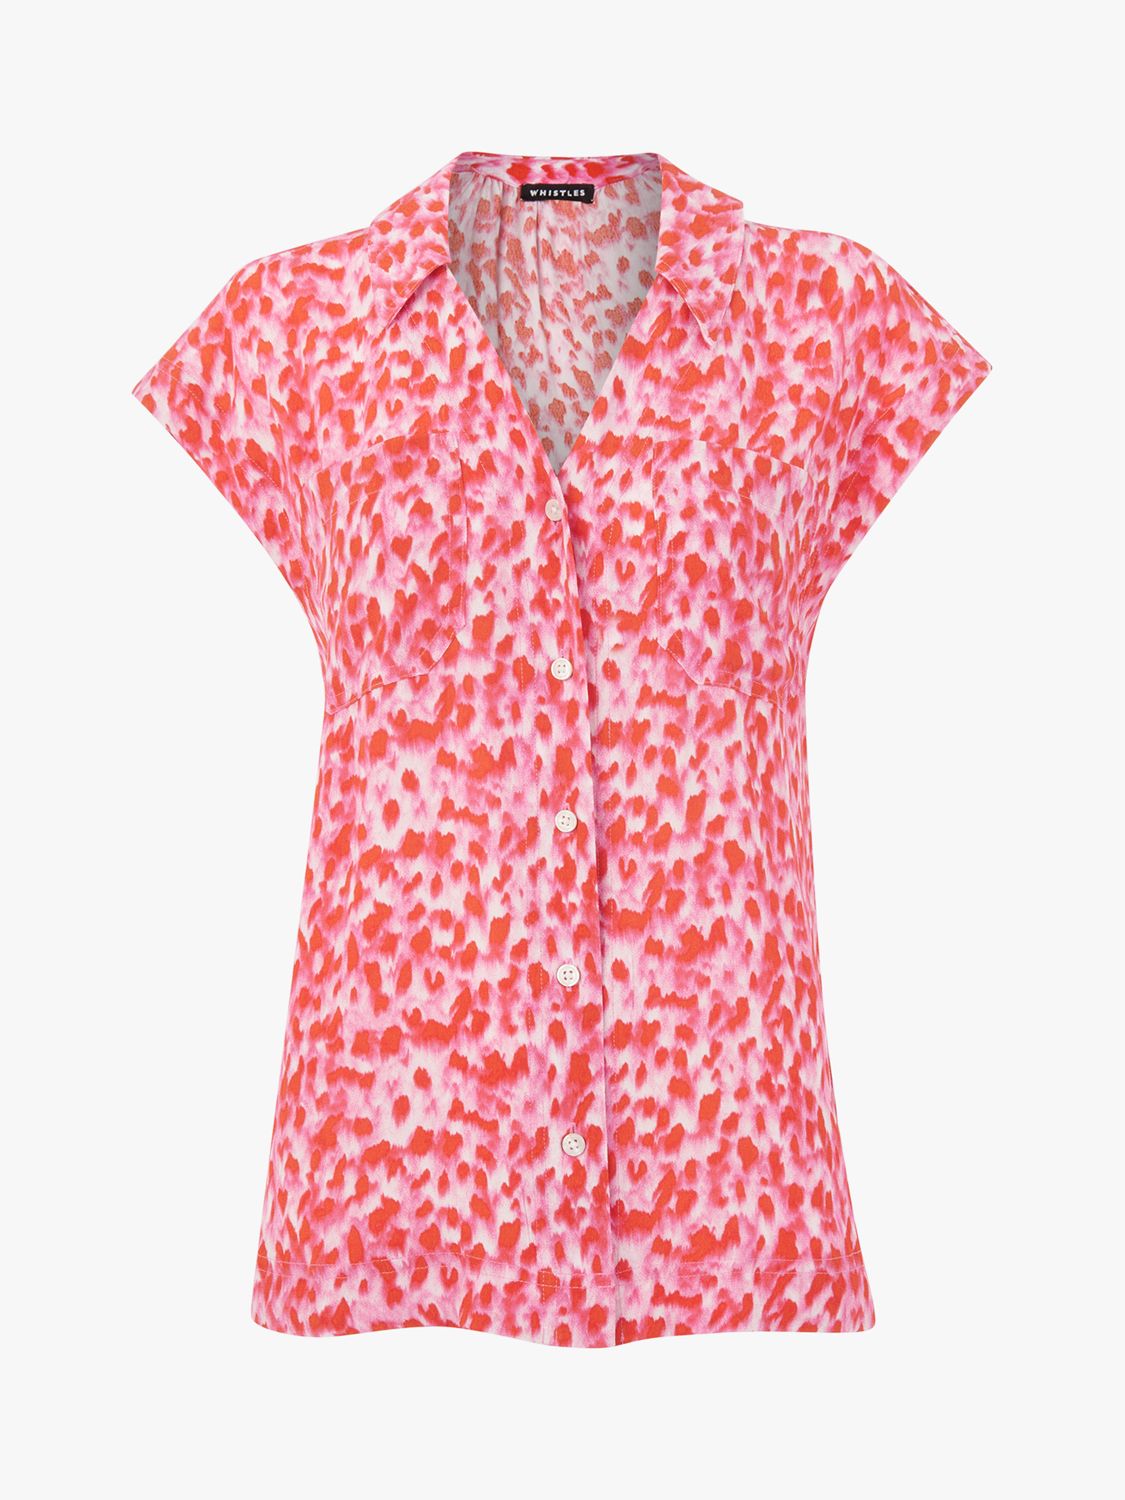 Whistles Blurred Strokes Print Shirt, Pink/Multi at John Lewis & Partners